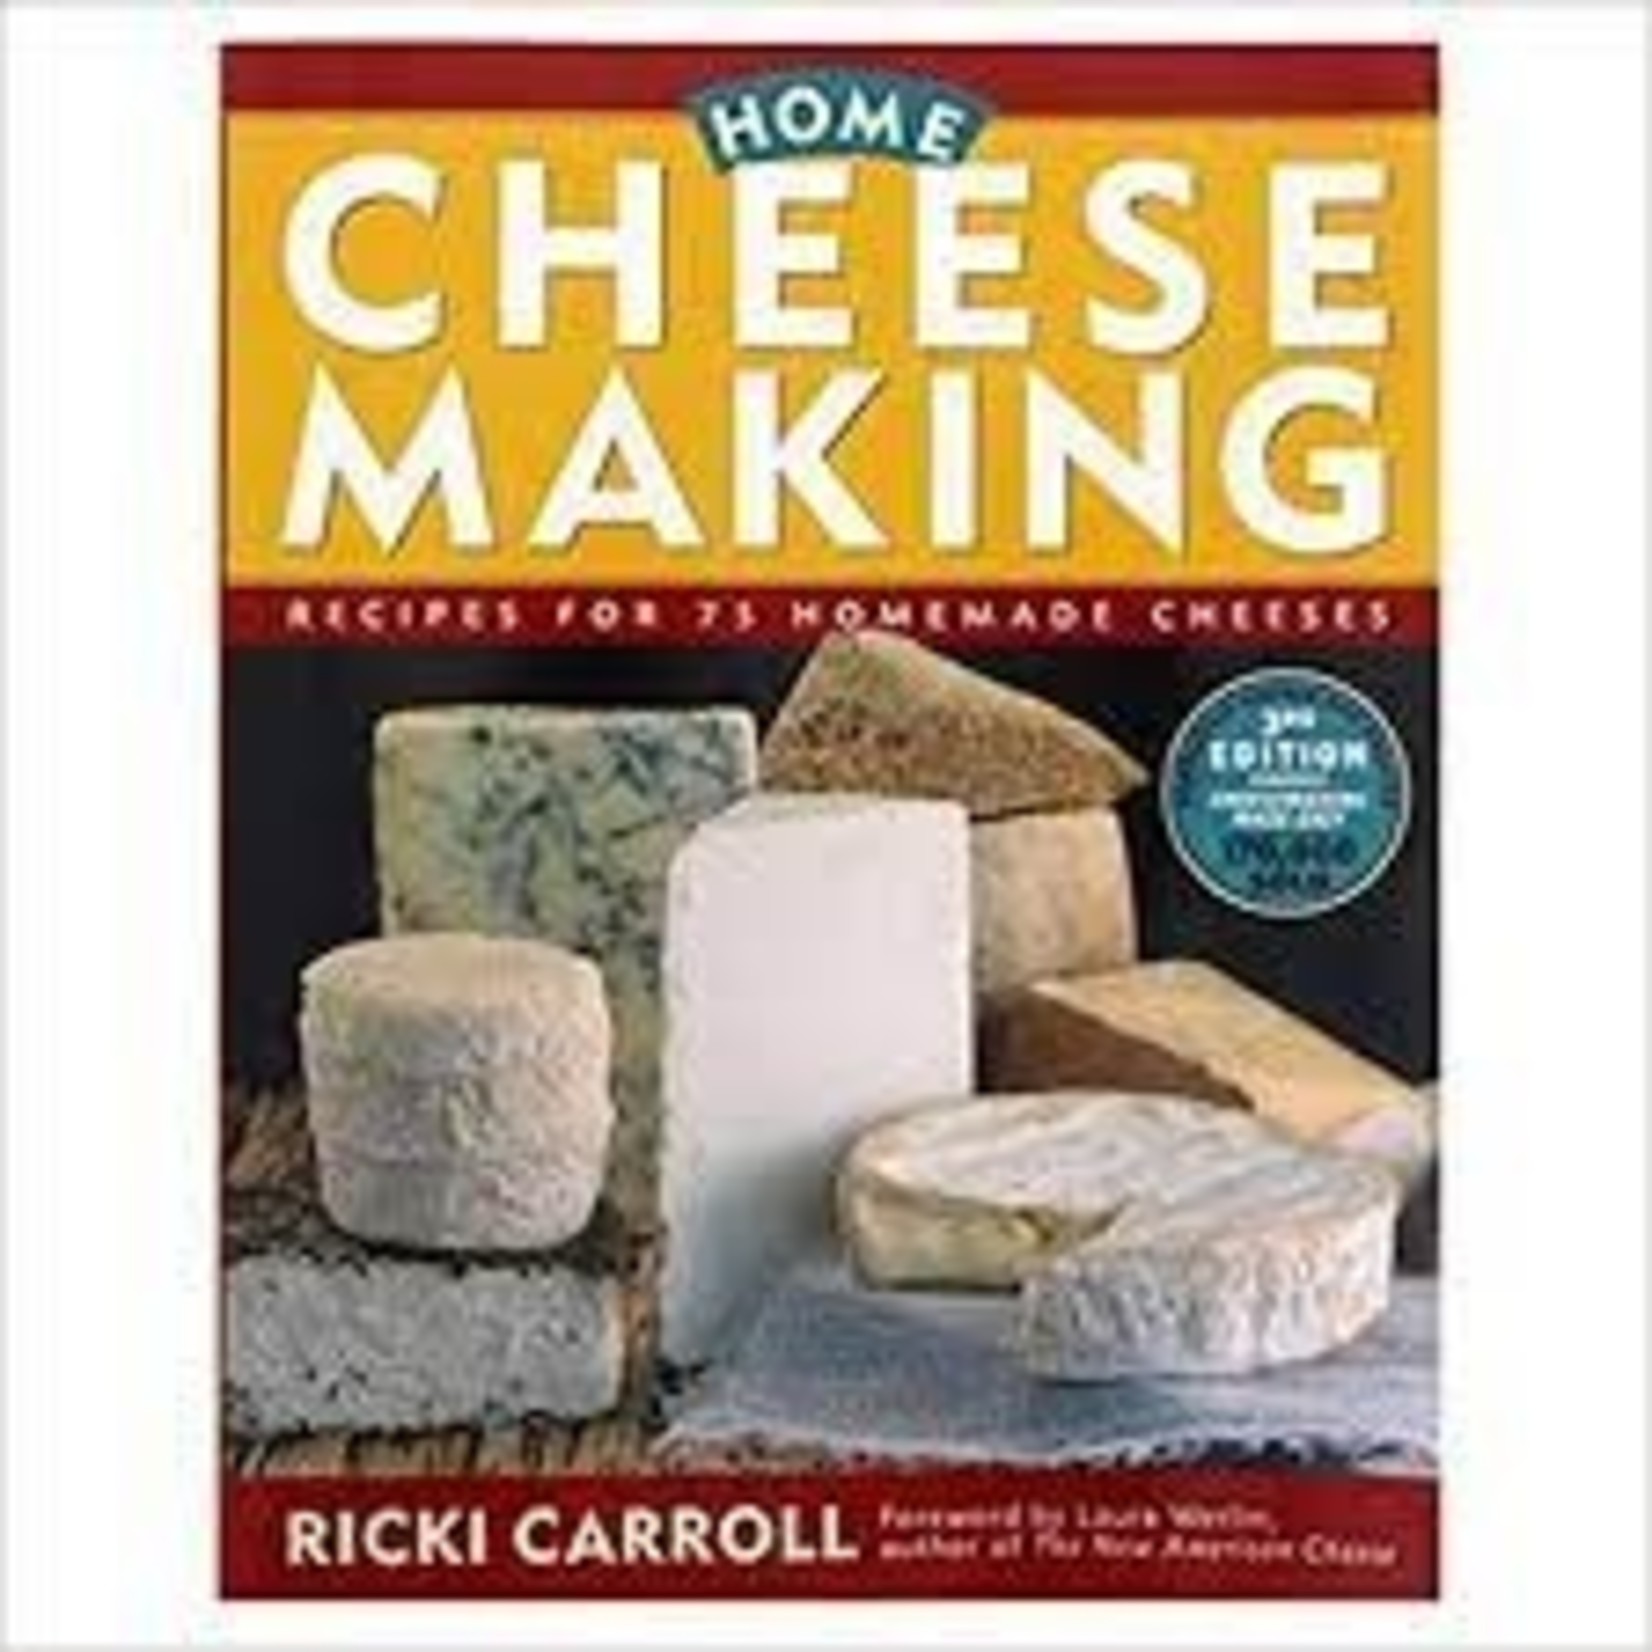 Home Cheese Making by Ricki Carroll